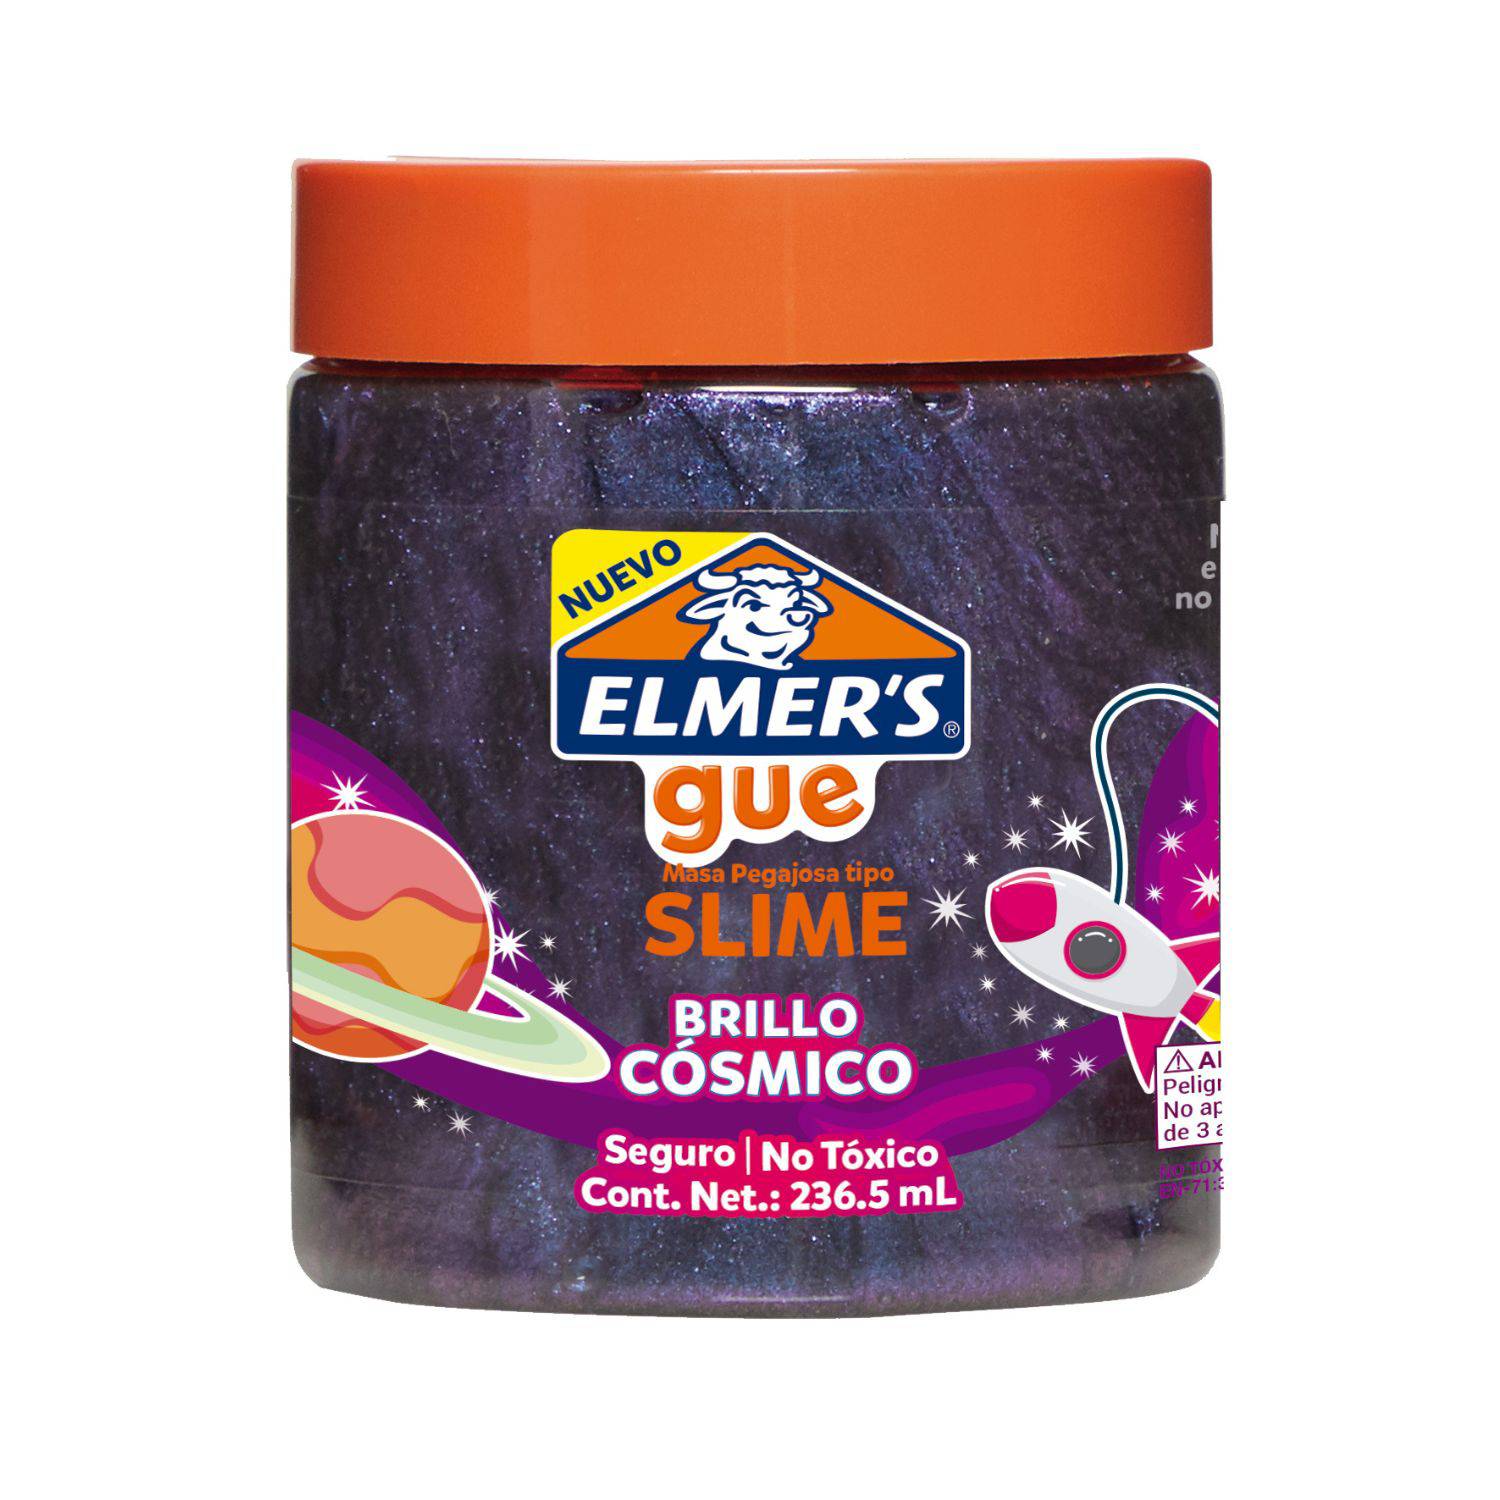 Slime Elmers Gue Brillo Cósmico 236mL